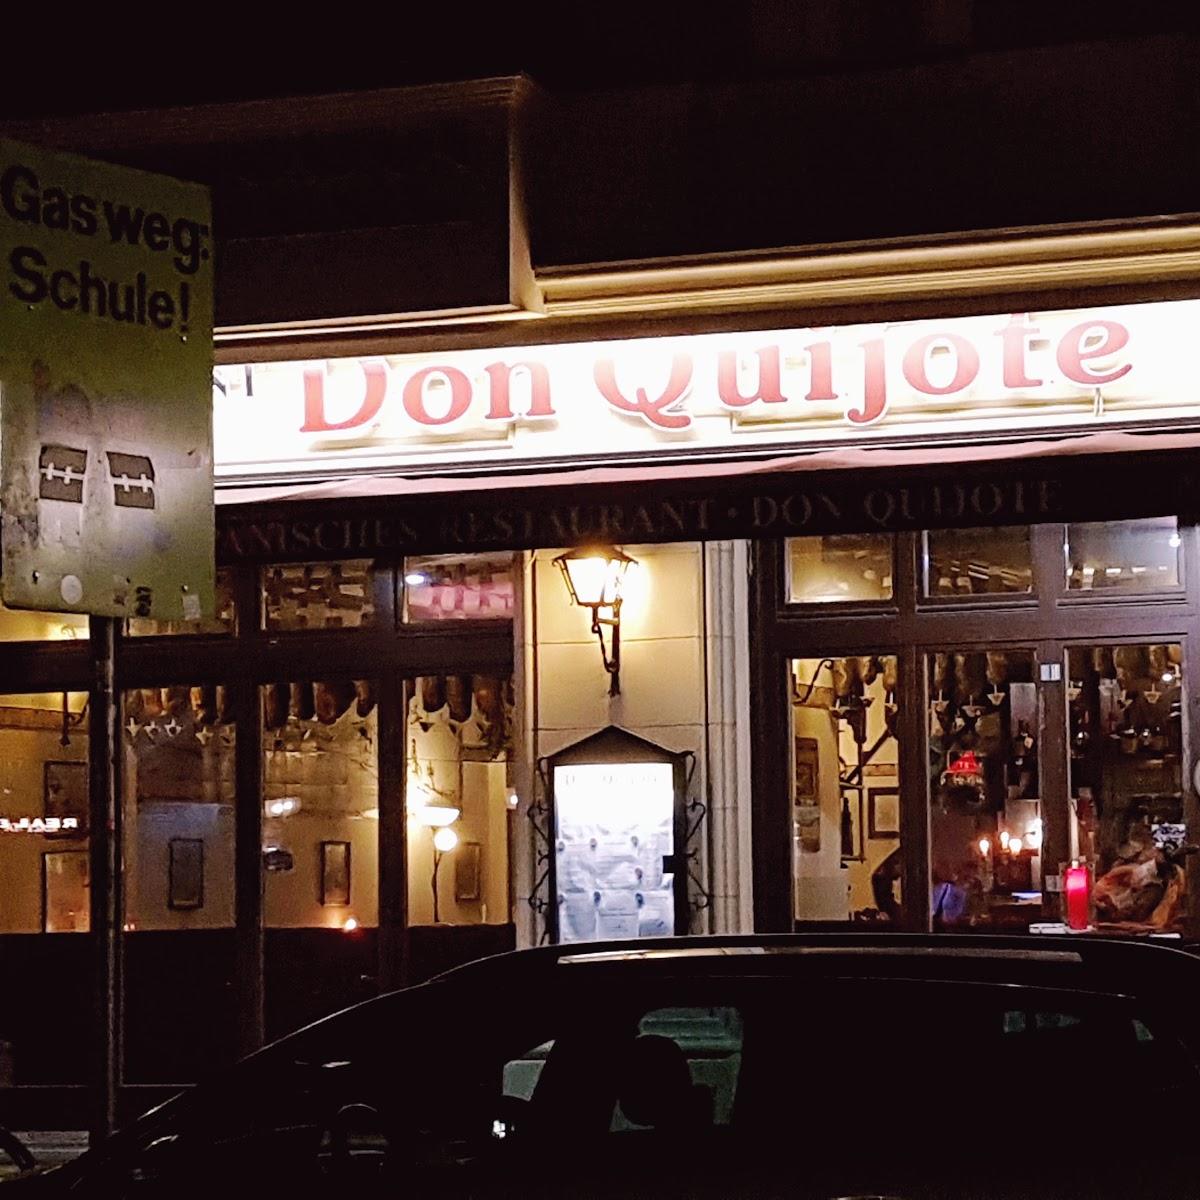 Restaurant "Don Quijote" in Berlin